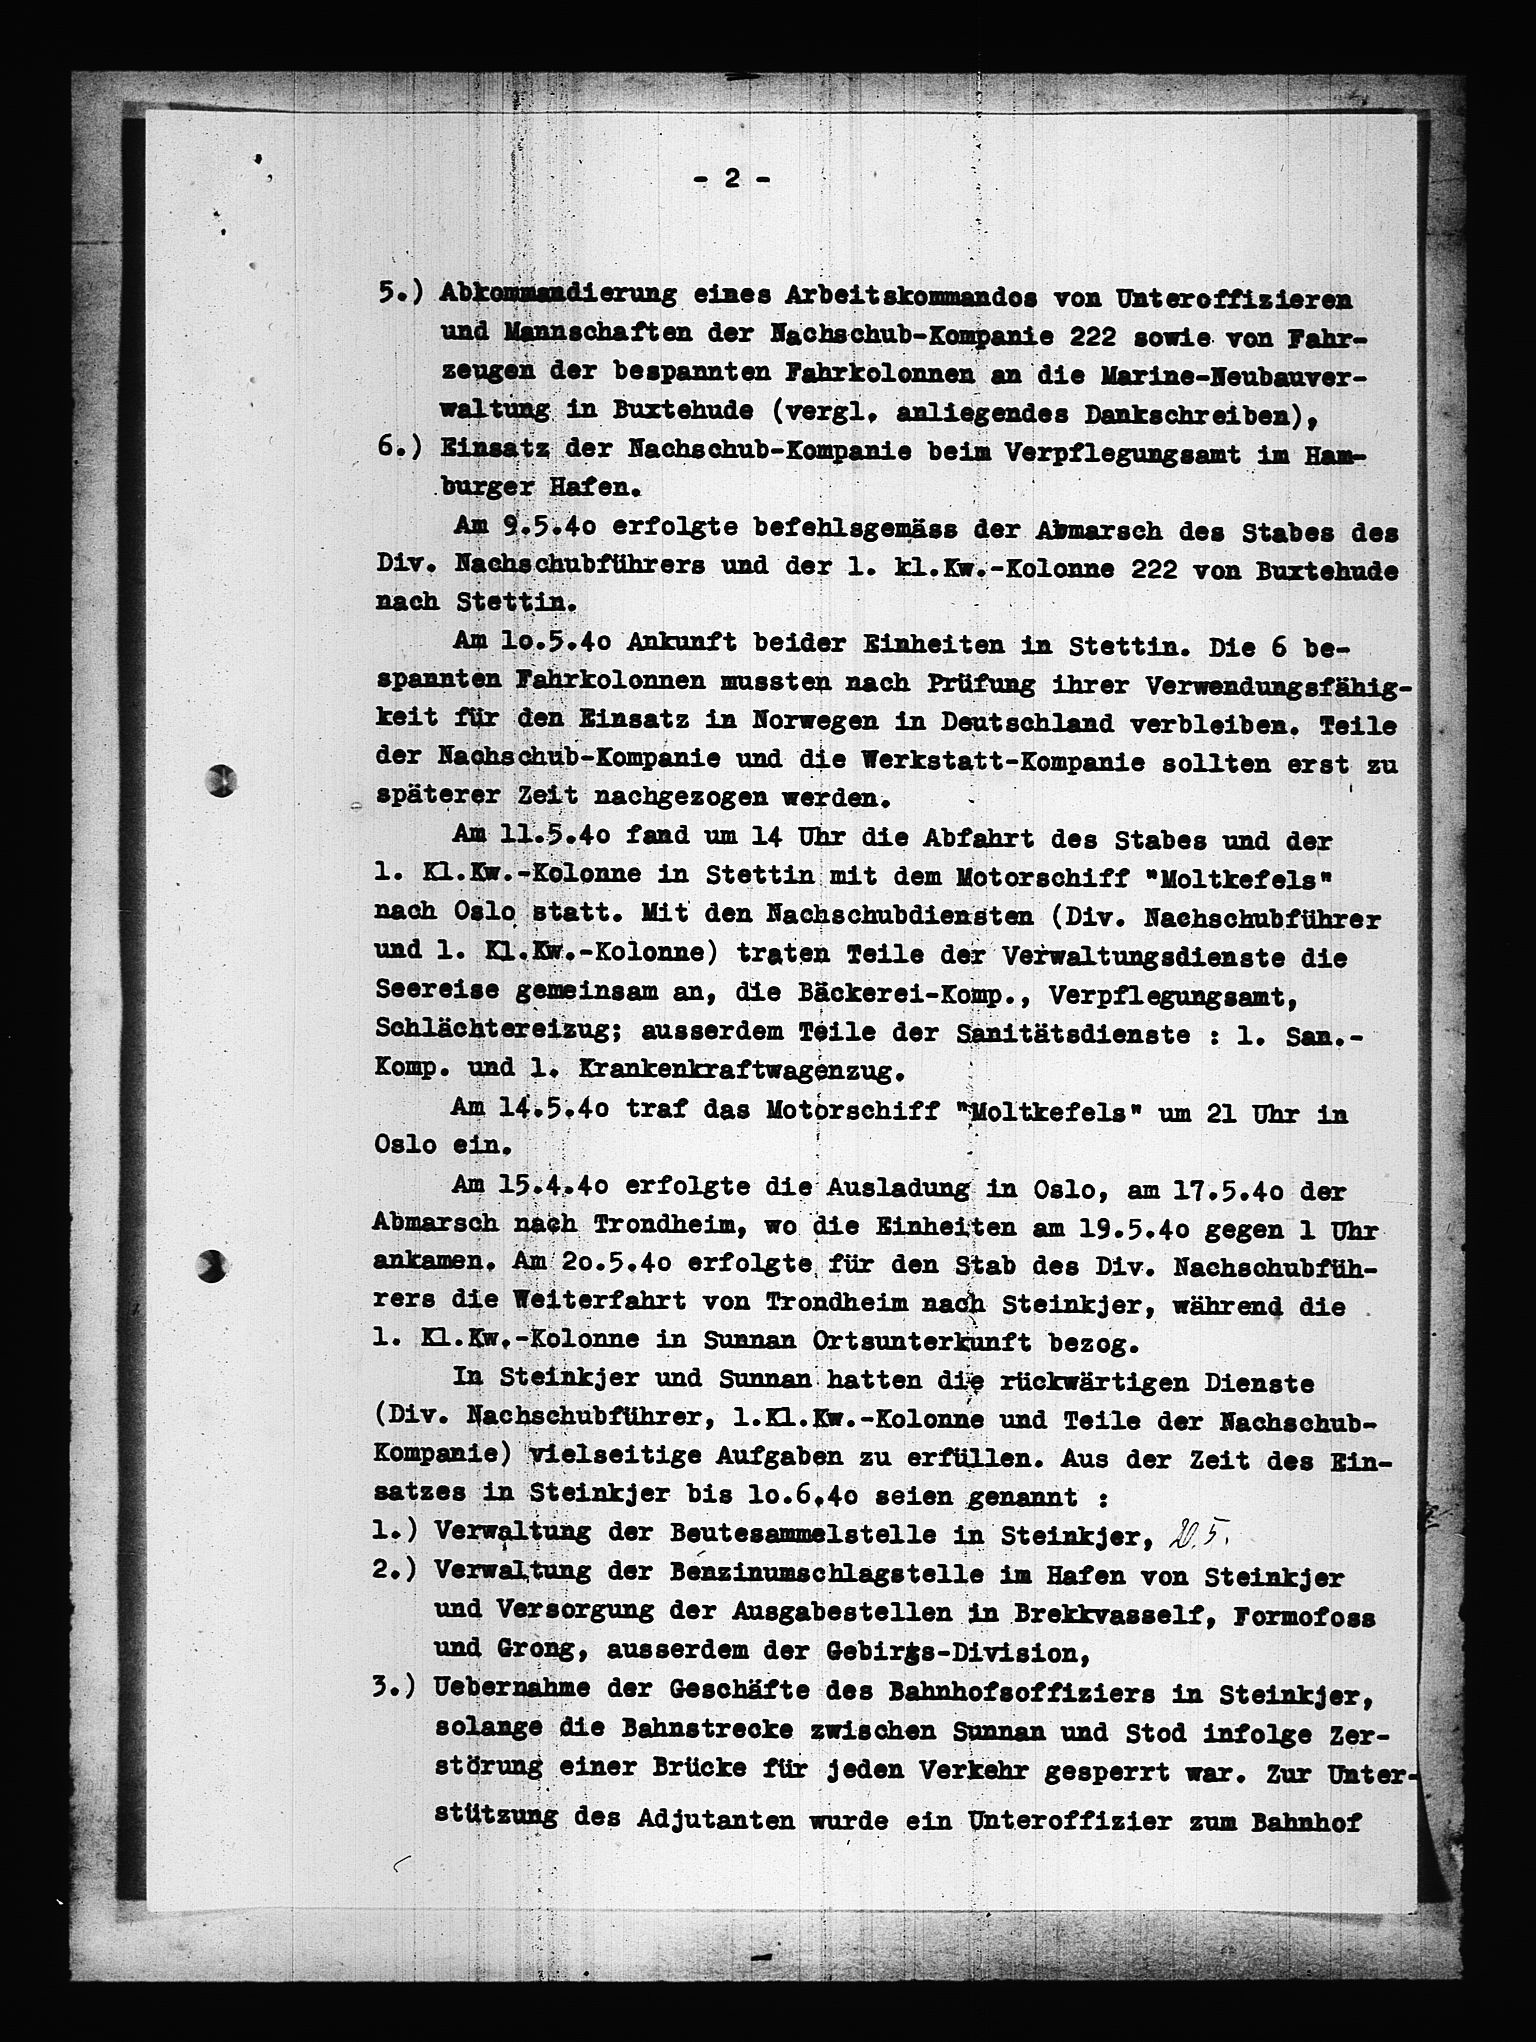 Documents Section, RA/RAFA-2200/V/L0087: Amerikansk mikrofilm "Captured German Documents".
Box No. 726.  FKA jnr. 601/1954., 1940, s. 293